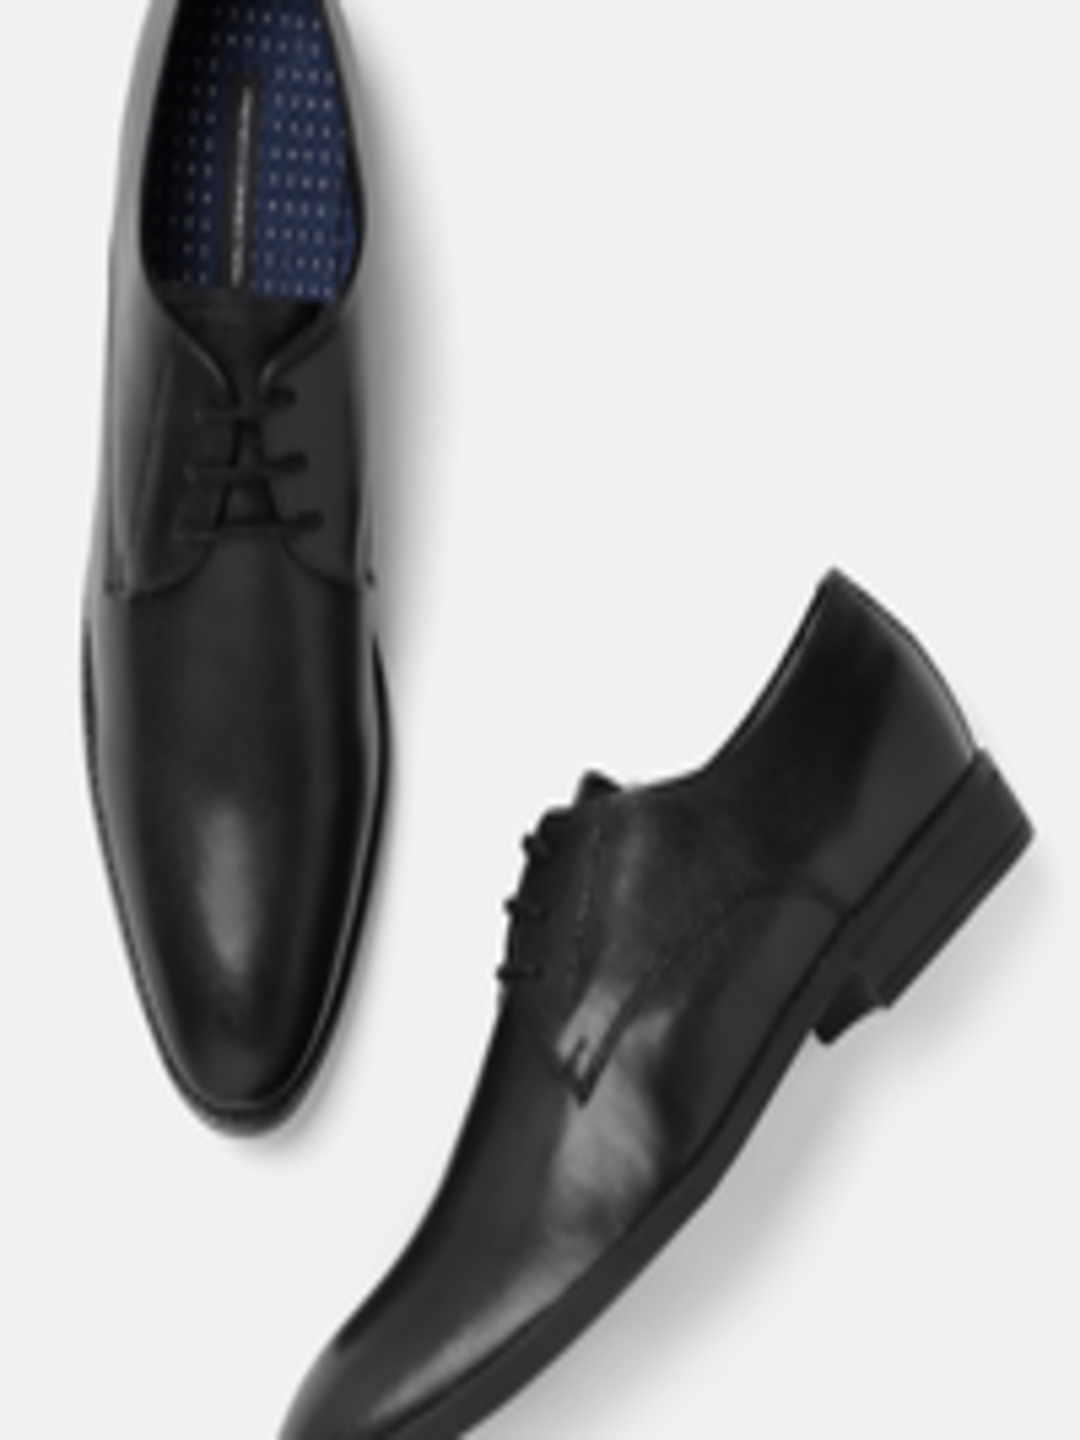 Mens French Shoe Brands - Best Design Idea